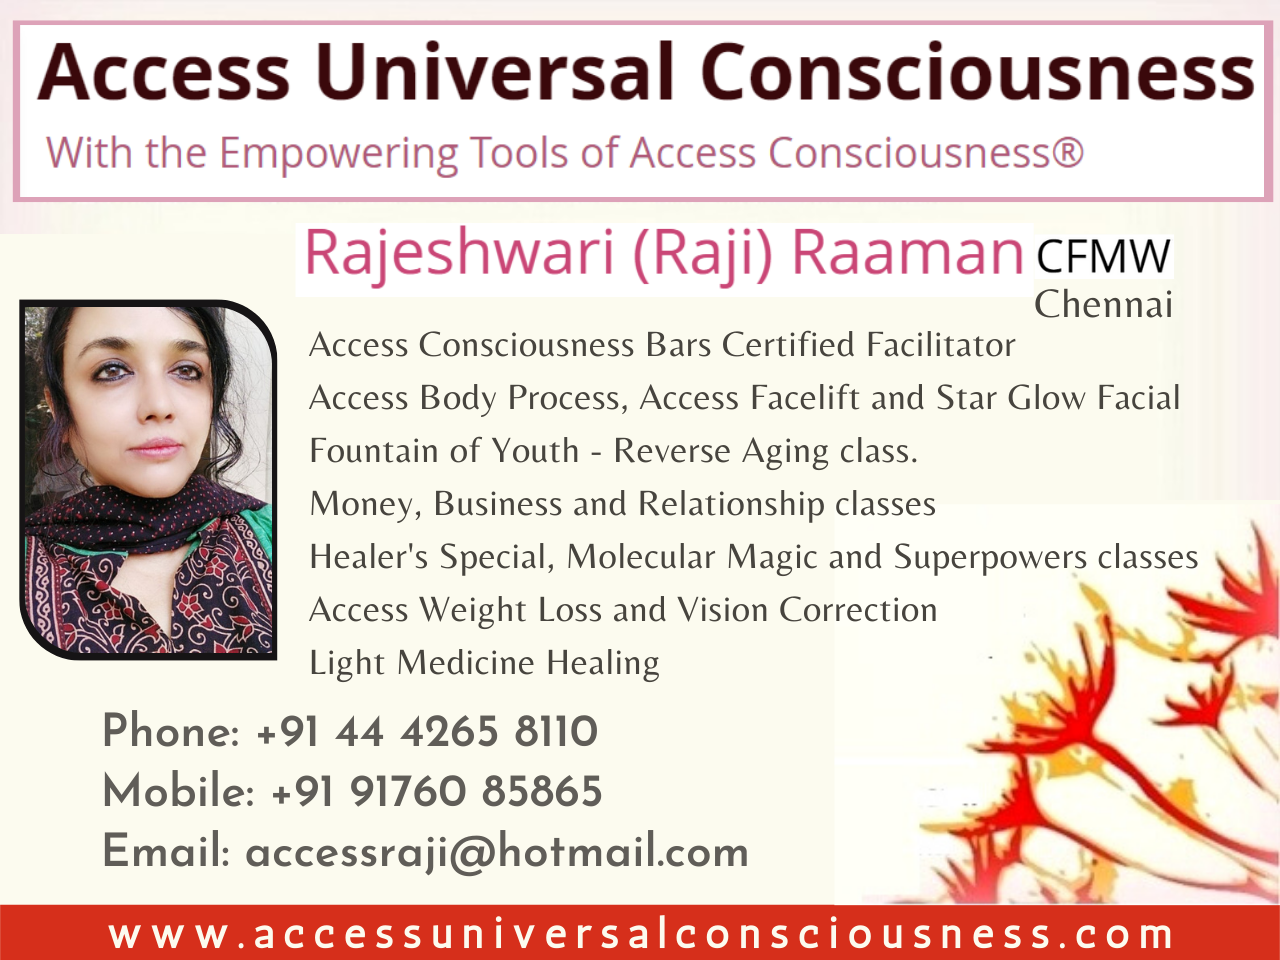 Raji Raaman, Access Consciousness bars and body process Facilitator - Madurai